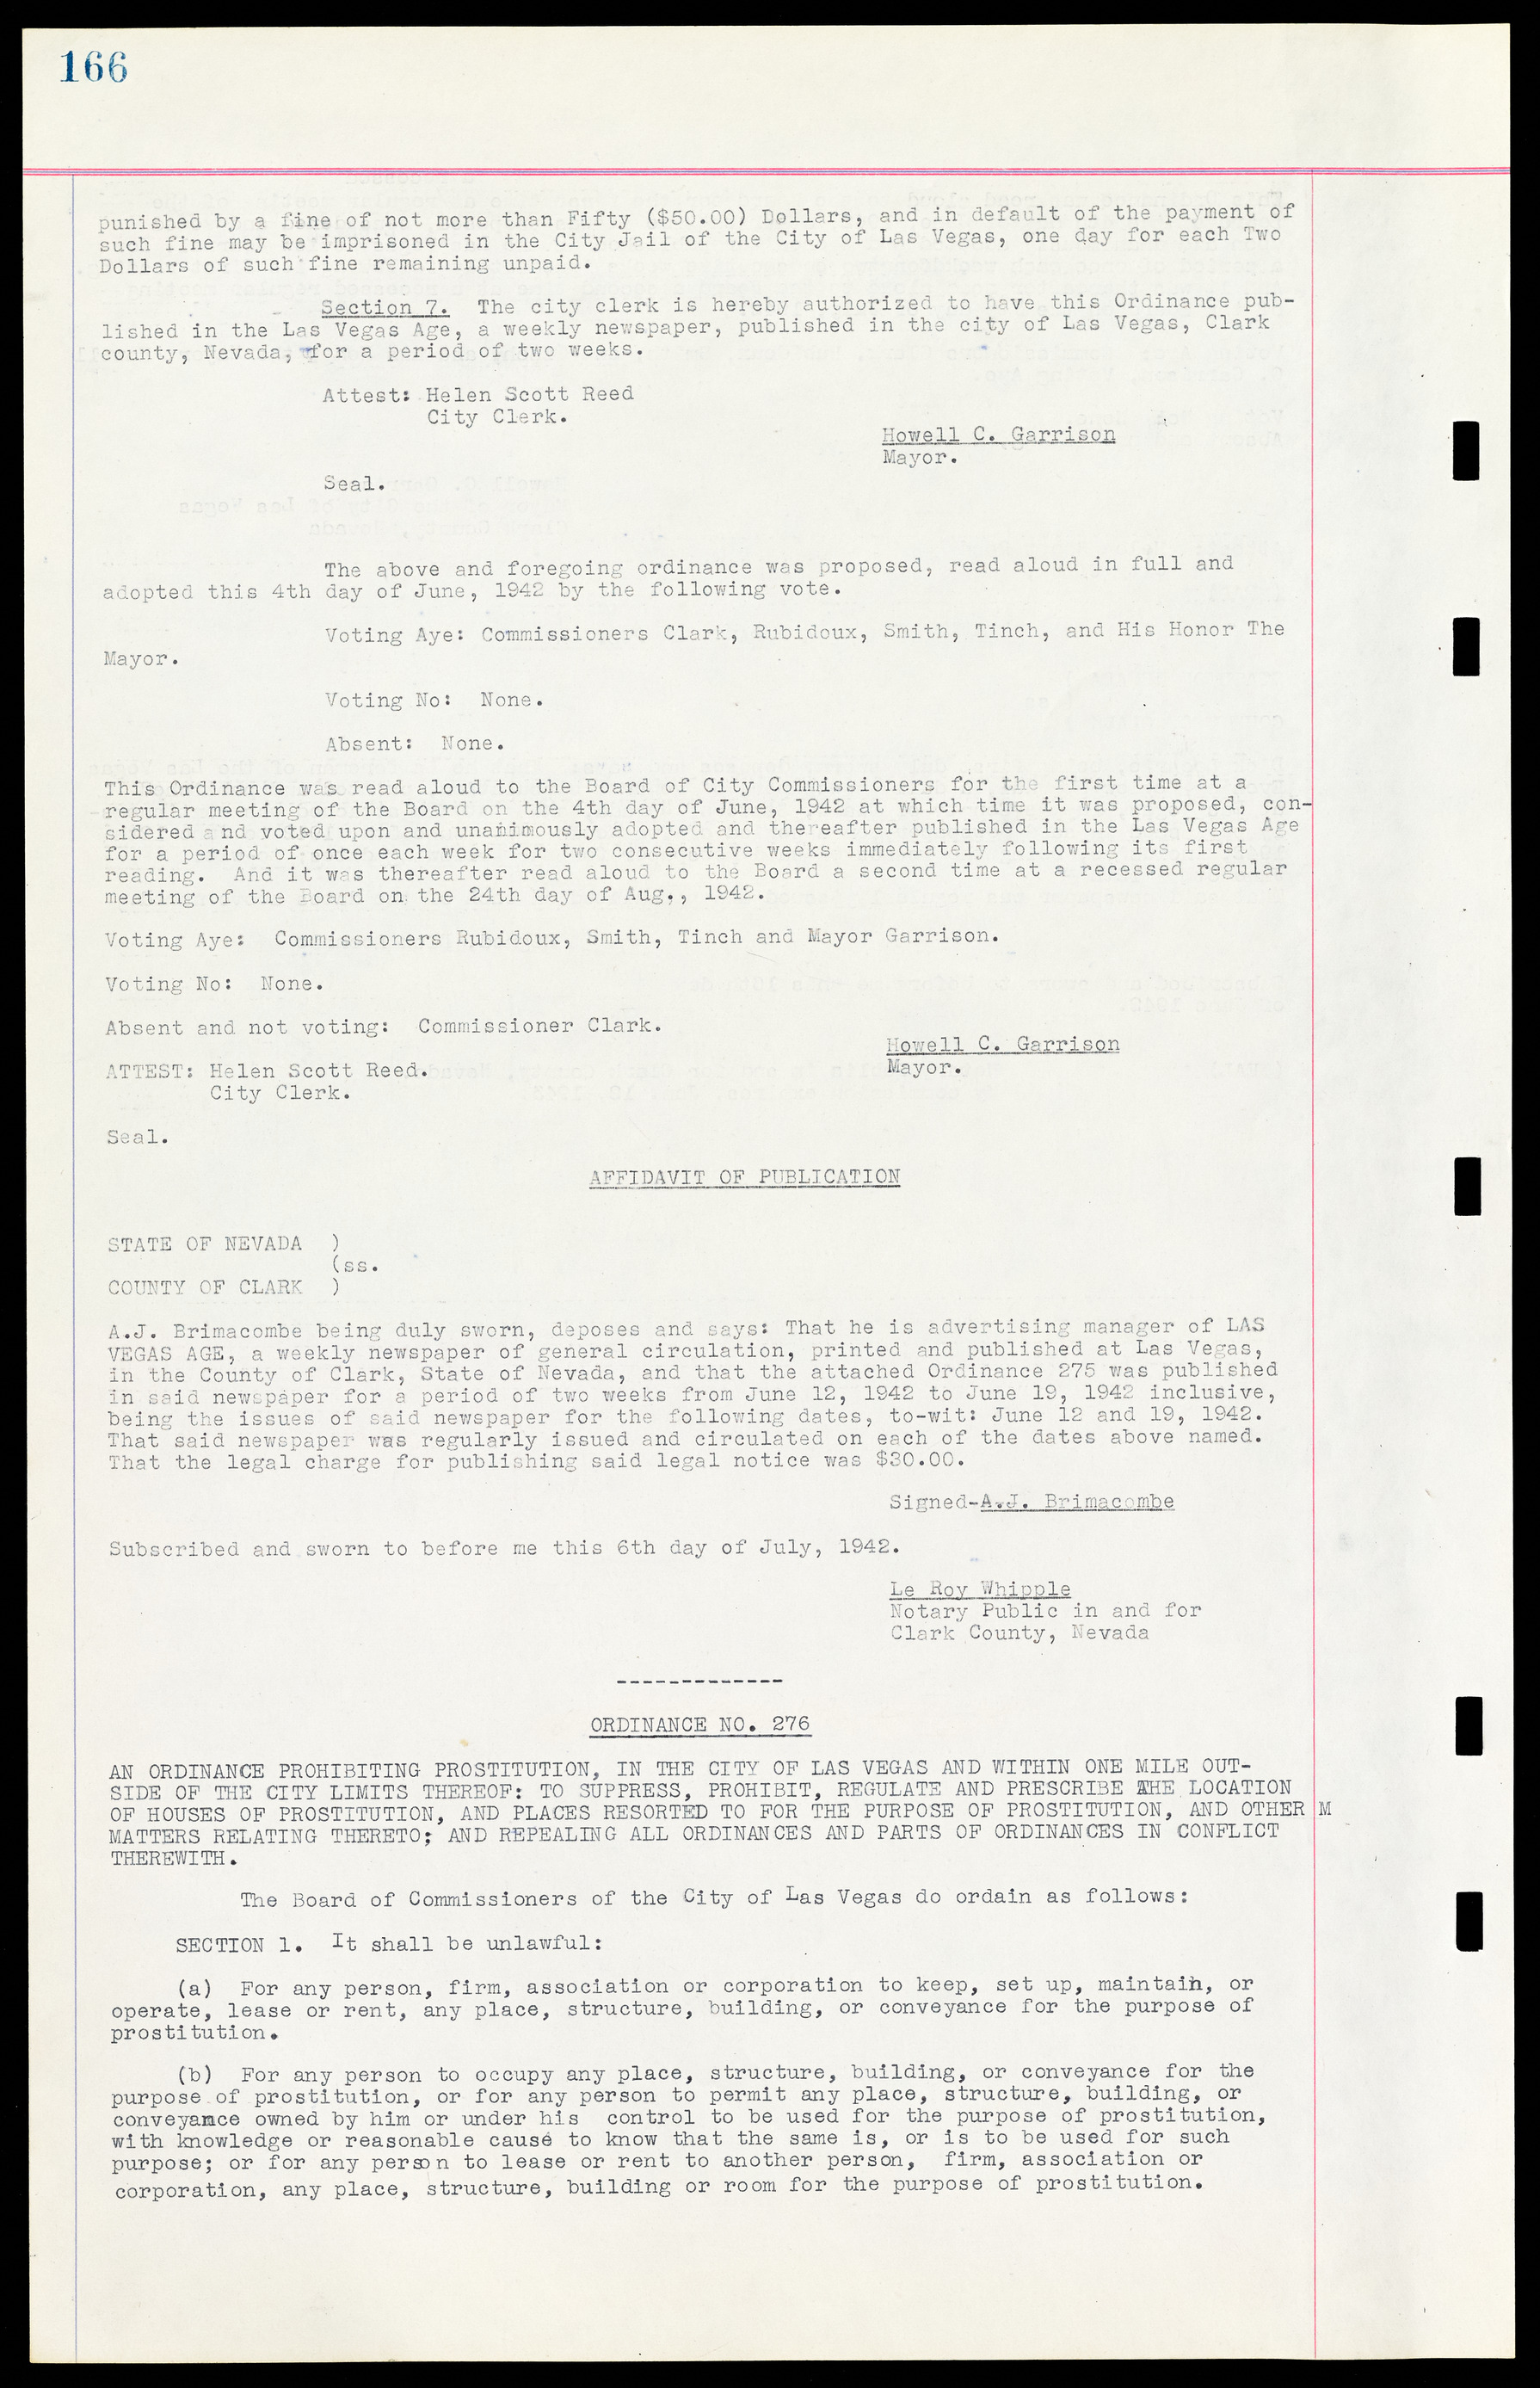 Las Vegas City Ordinances, March 31, 1933 to October 25, 1950, lvc000014-186